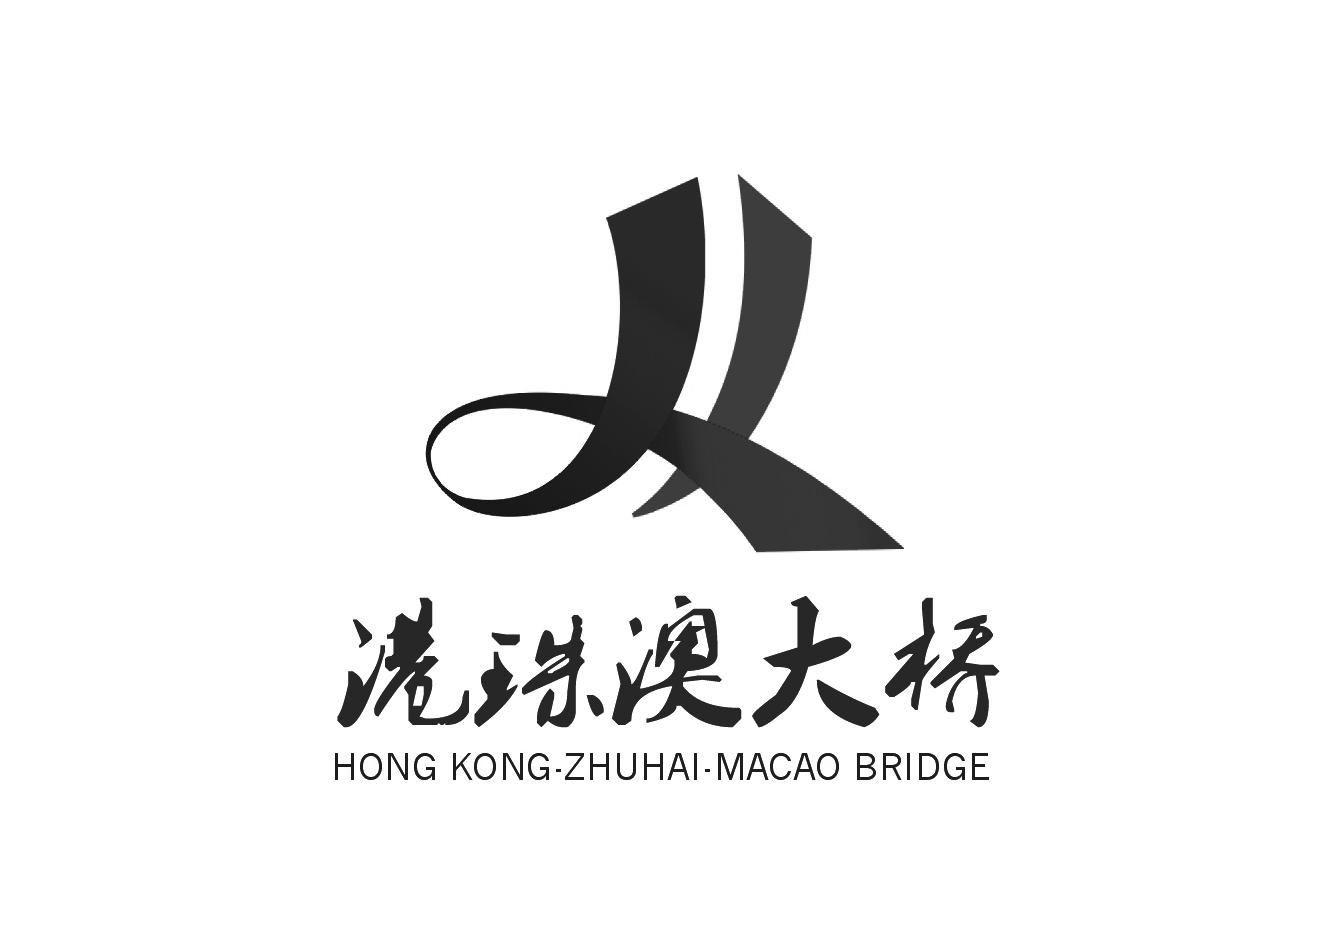 港珠澳大桥 hong kong